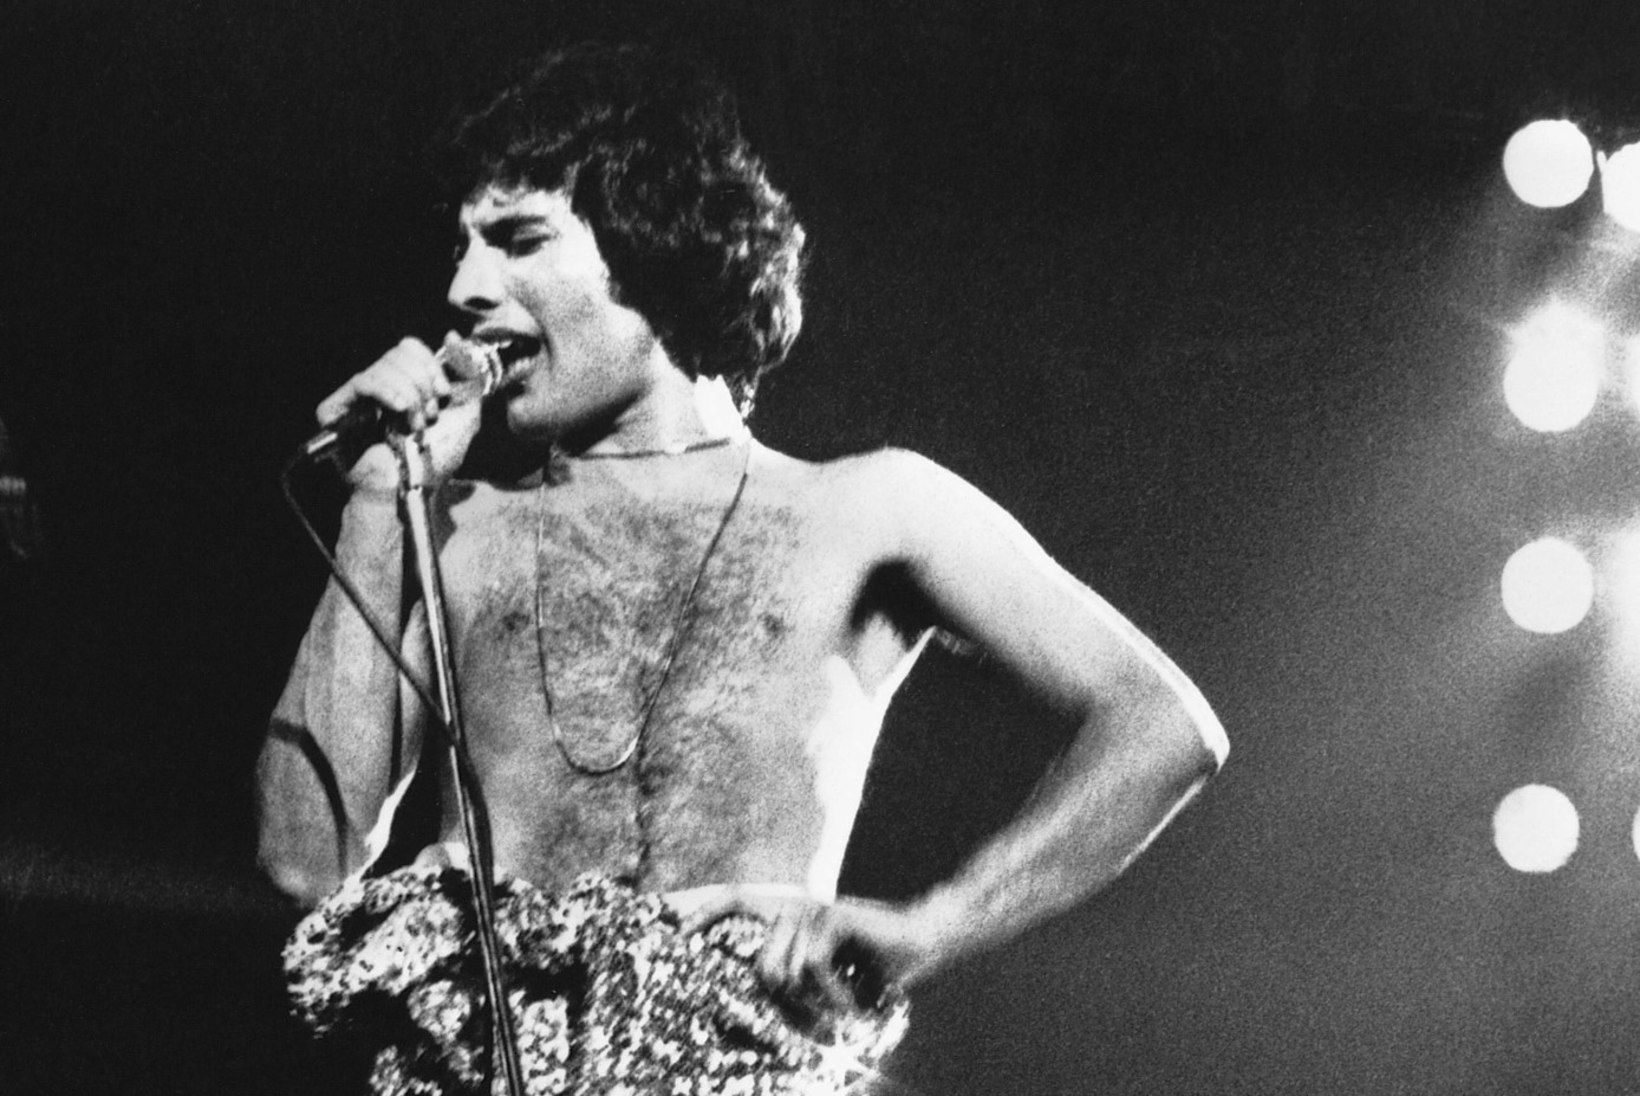 Freddie Mercury paljastas "Bohemian Rhapsodys" oma homoseksuaalsuse?